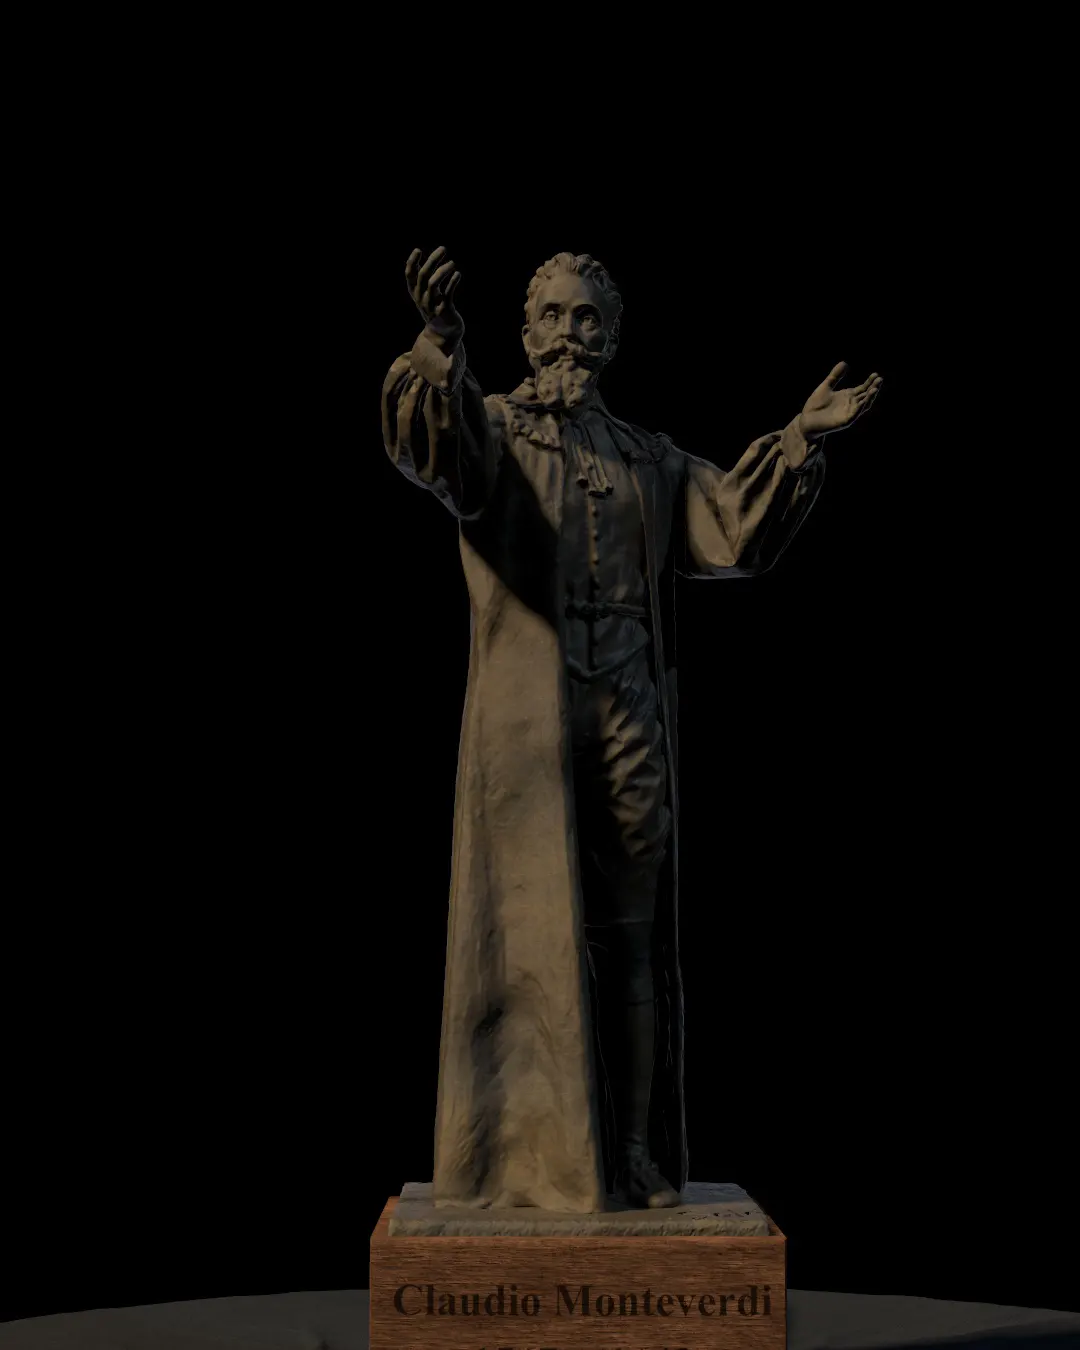 Claudio-Monteverdi-statue/Rendering-of-Claudio-Monteverdi-statue-modeled-by-Emil-Sole-8.webp